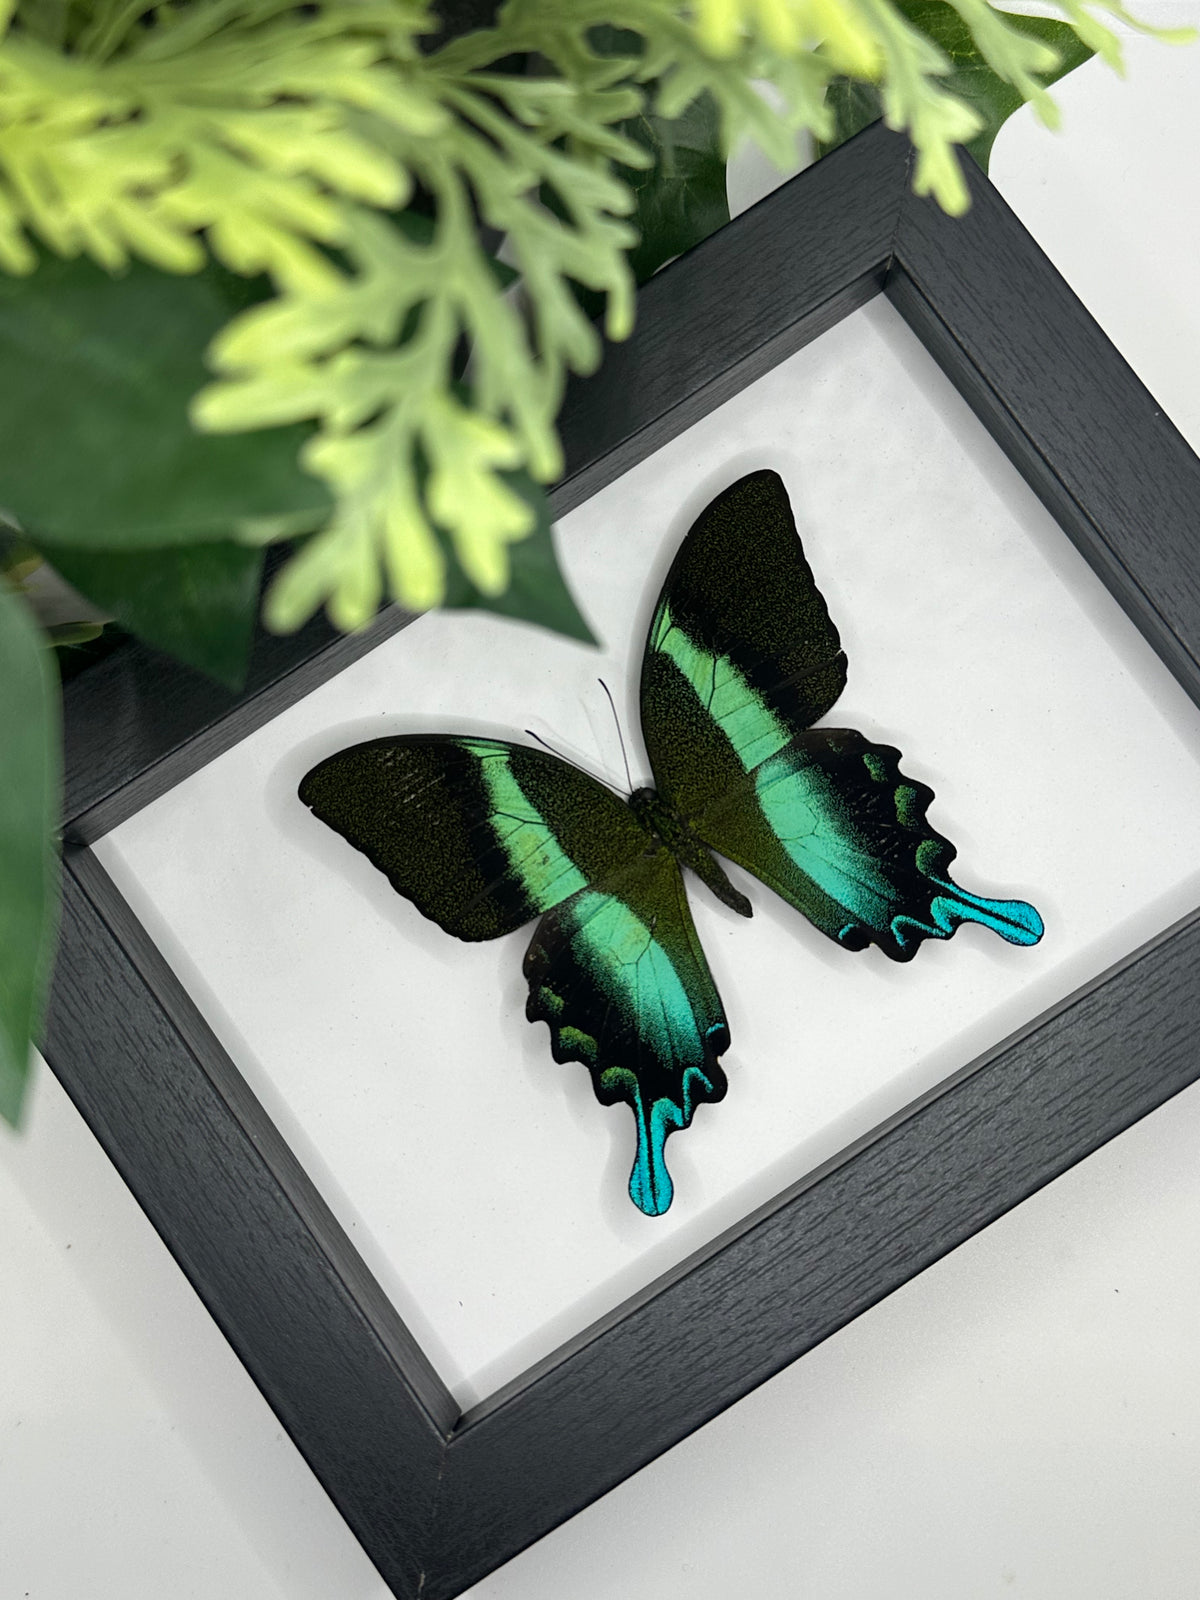 Green Swallowtail / Papilio Blumei in a frame